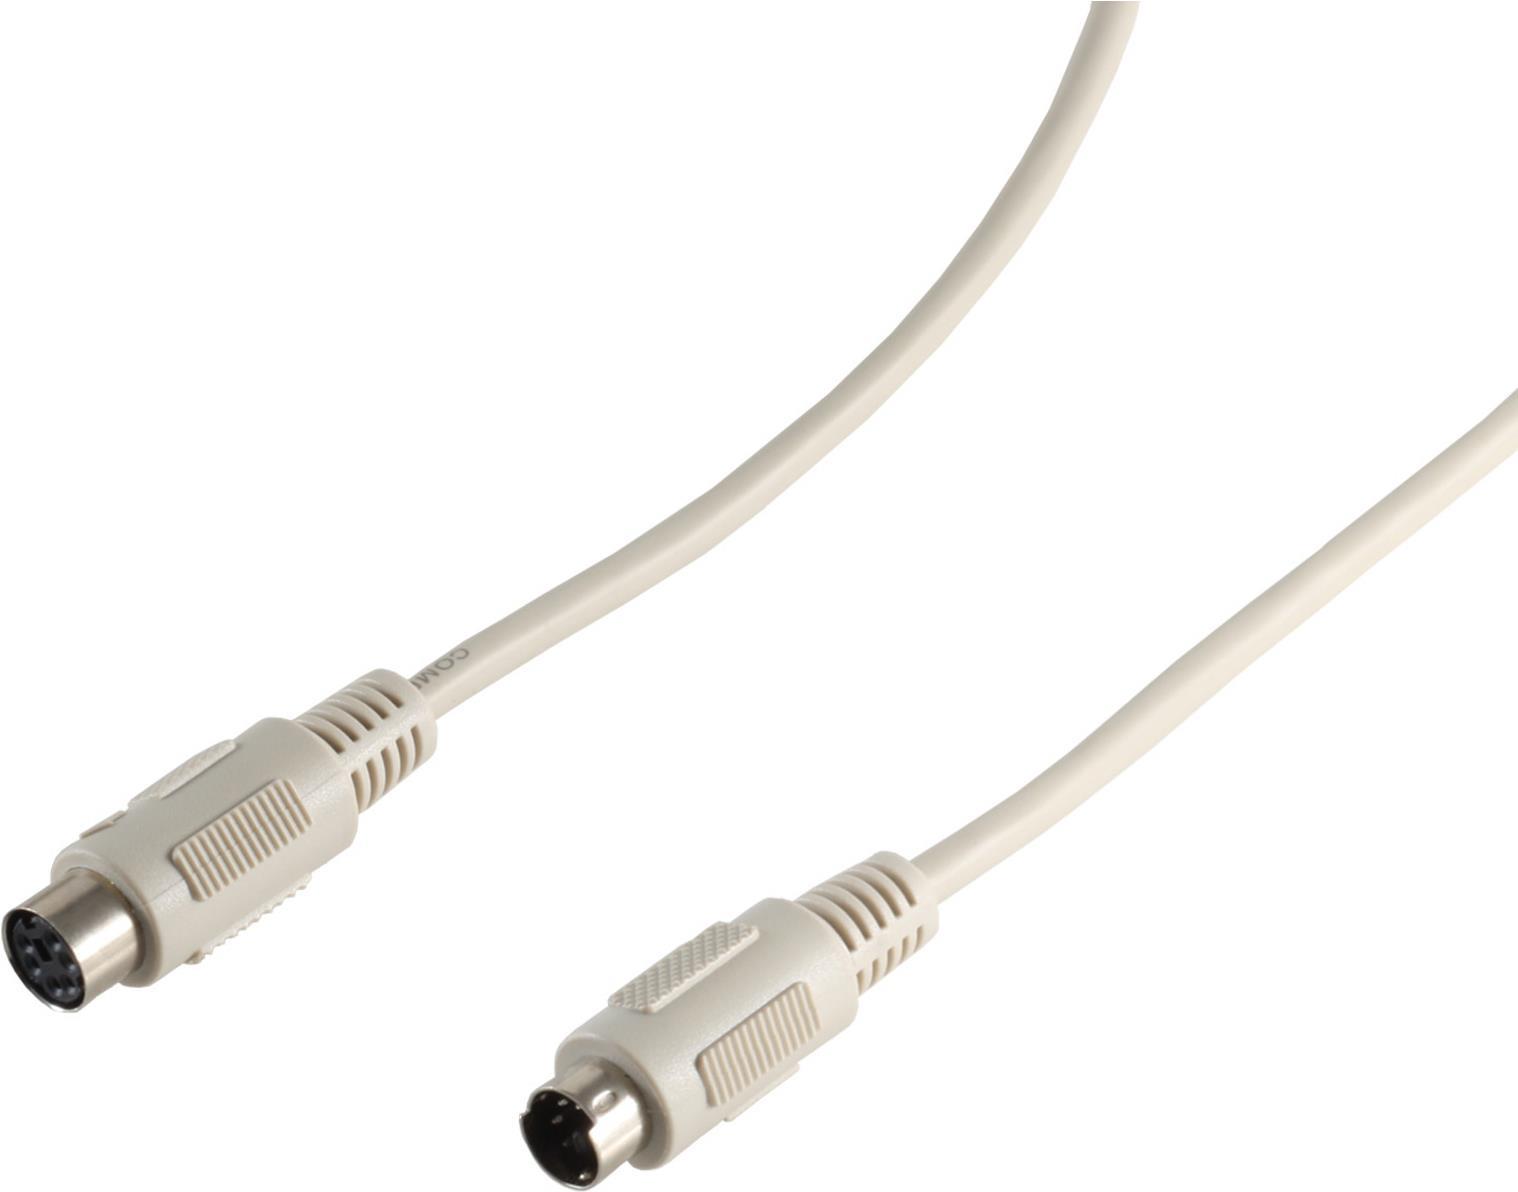 ShiverPeaks S/CONN maximum connectivity PS2 Verlängerung, 6-pol. Mini DIN-Stecker auf 6-pol. Mini DIN-Kupplung, 3,0m (78106-3)